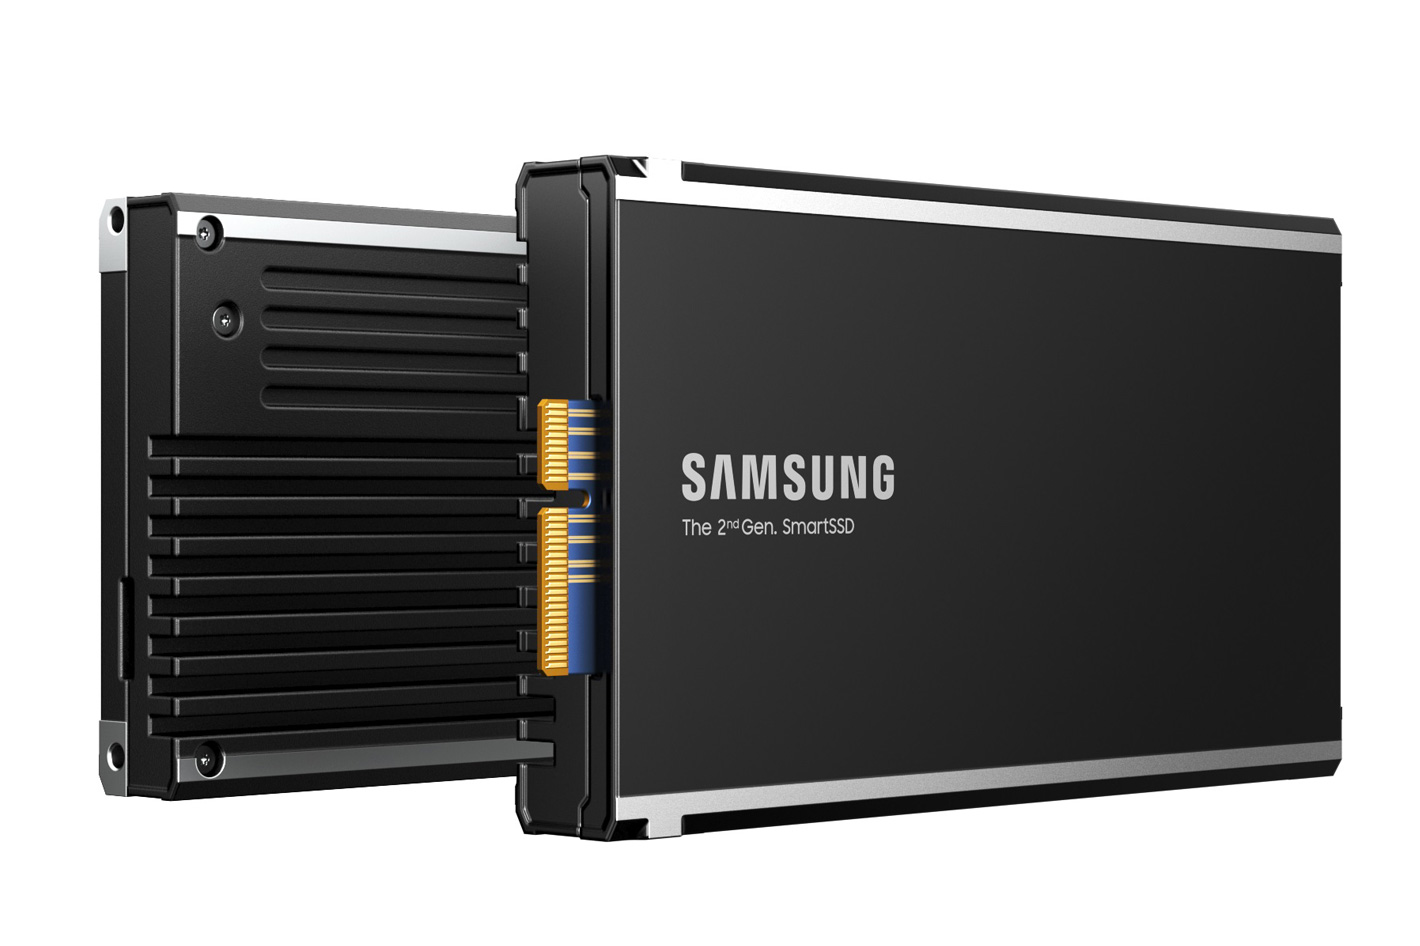 Samsung develops its second-generation SmartSSD